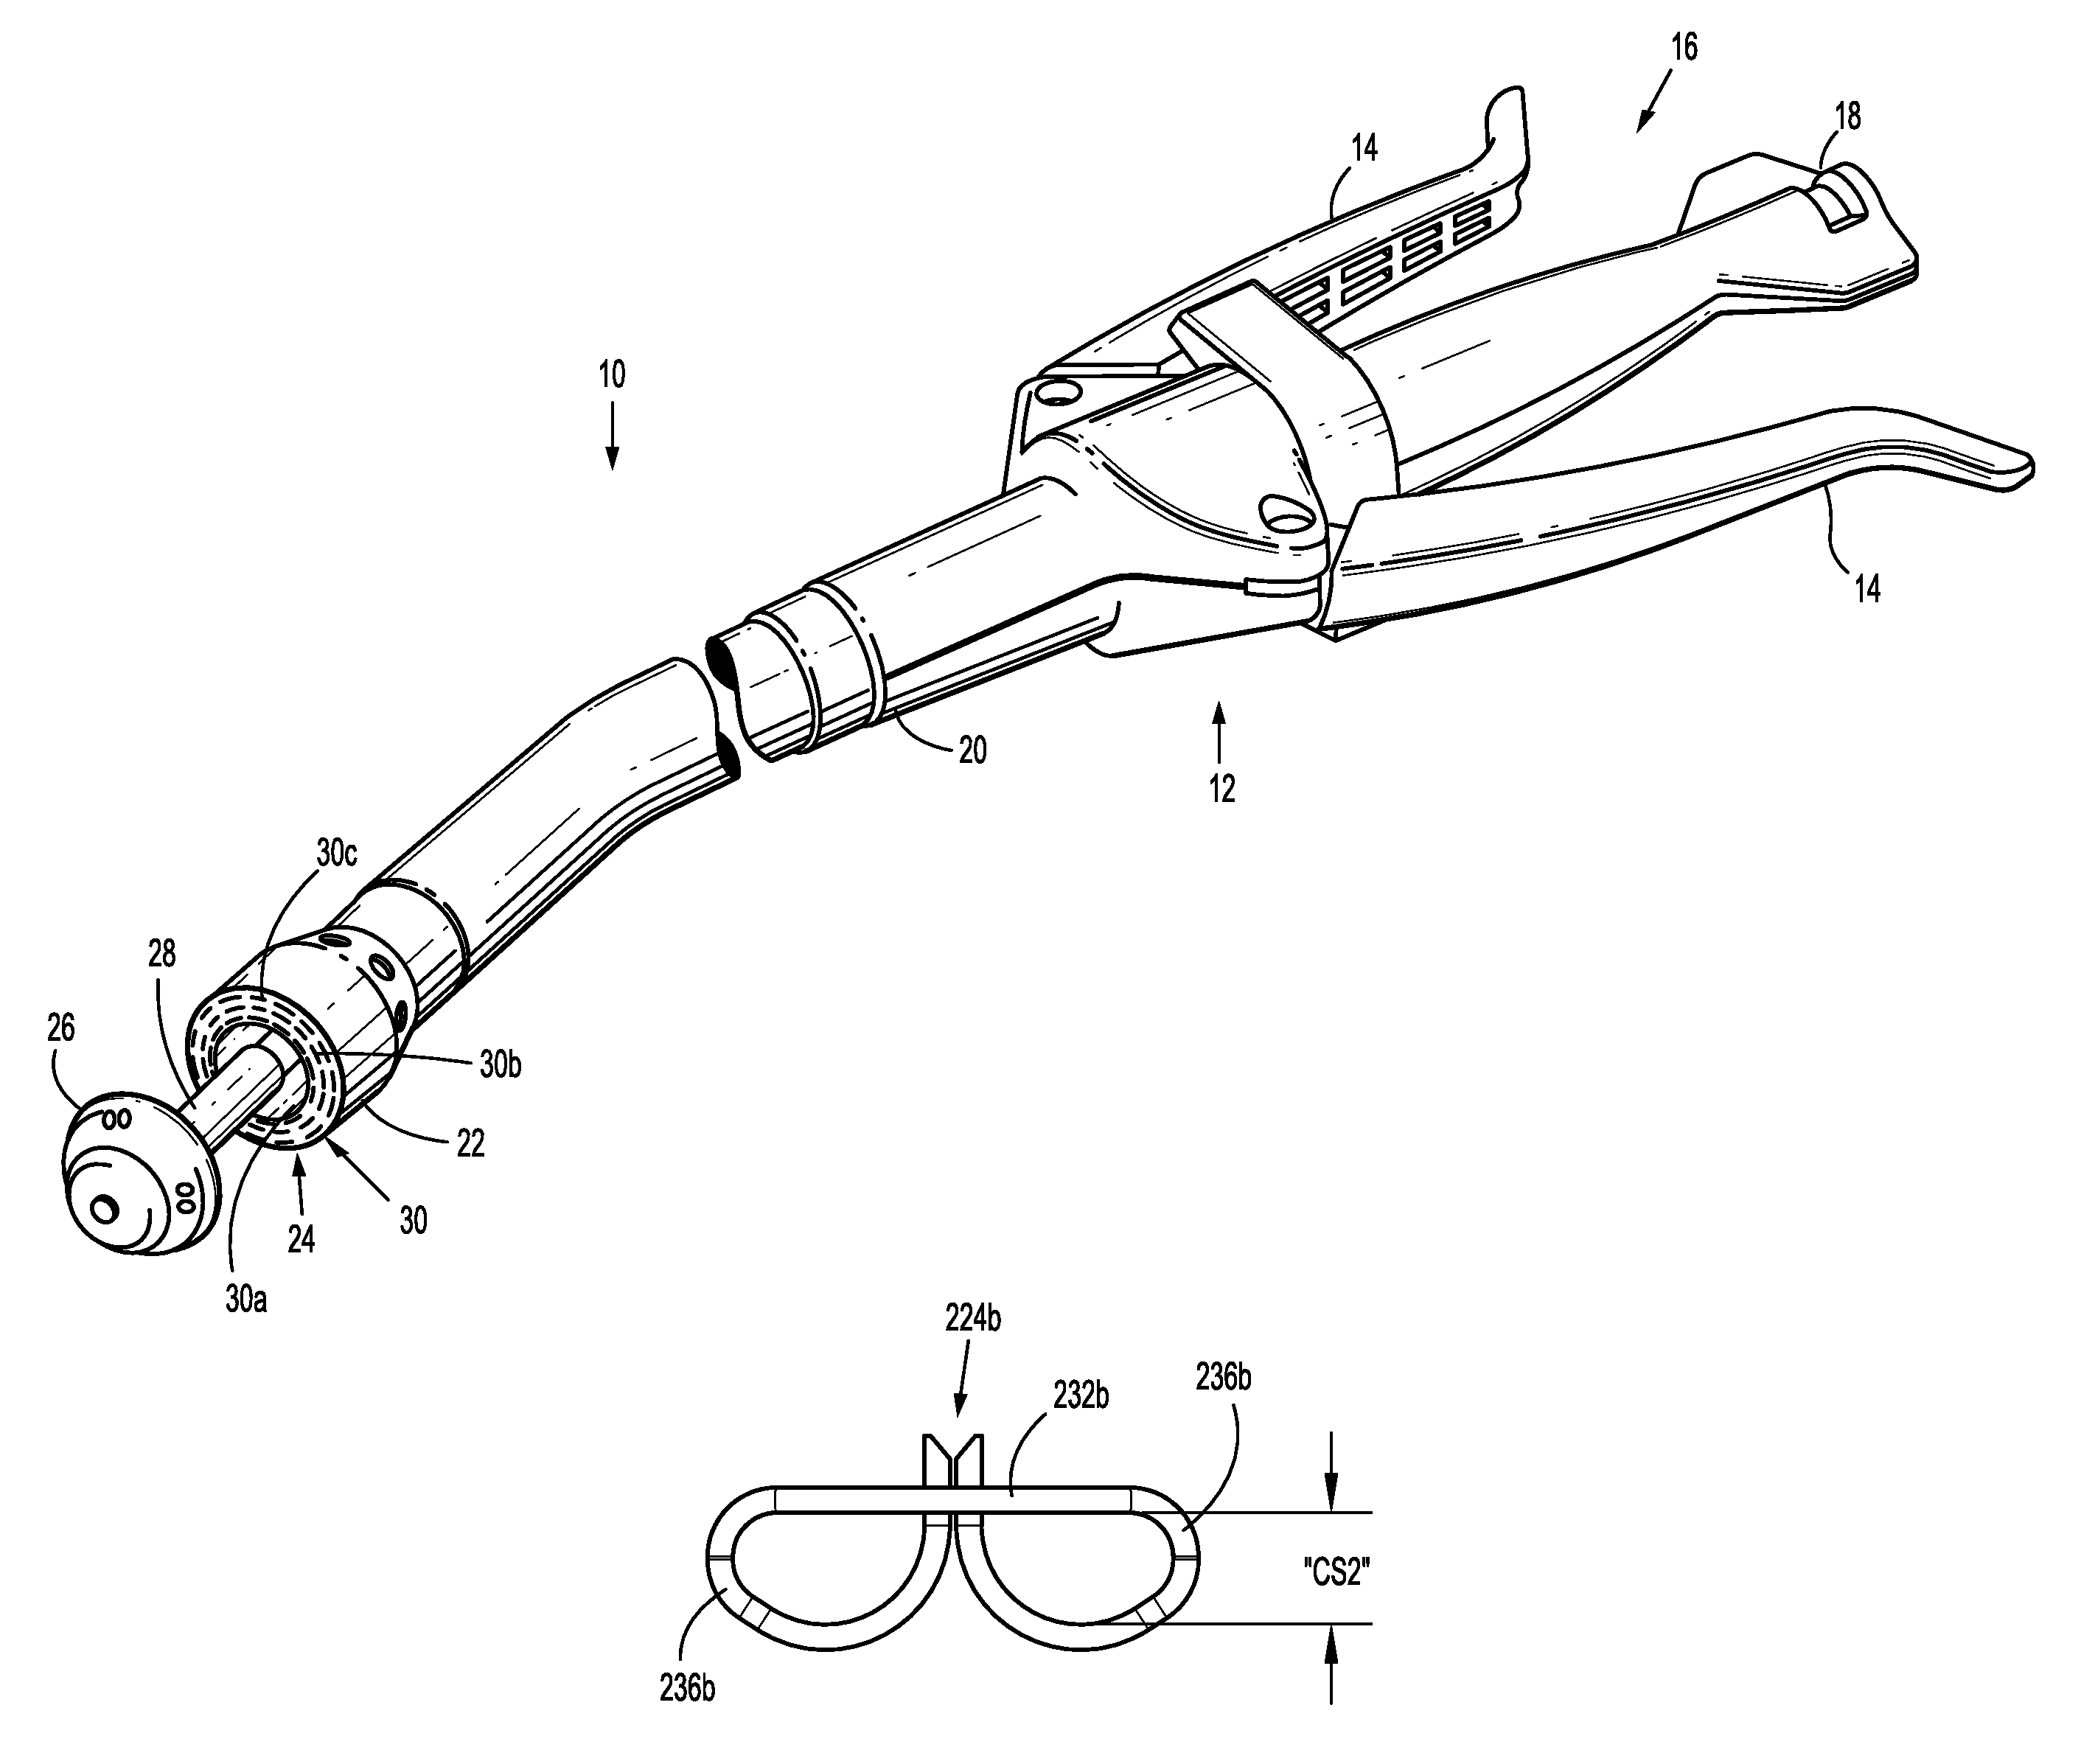 Surgical fastener applying apparatus